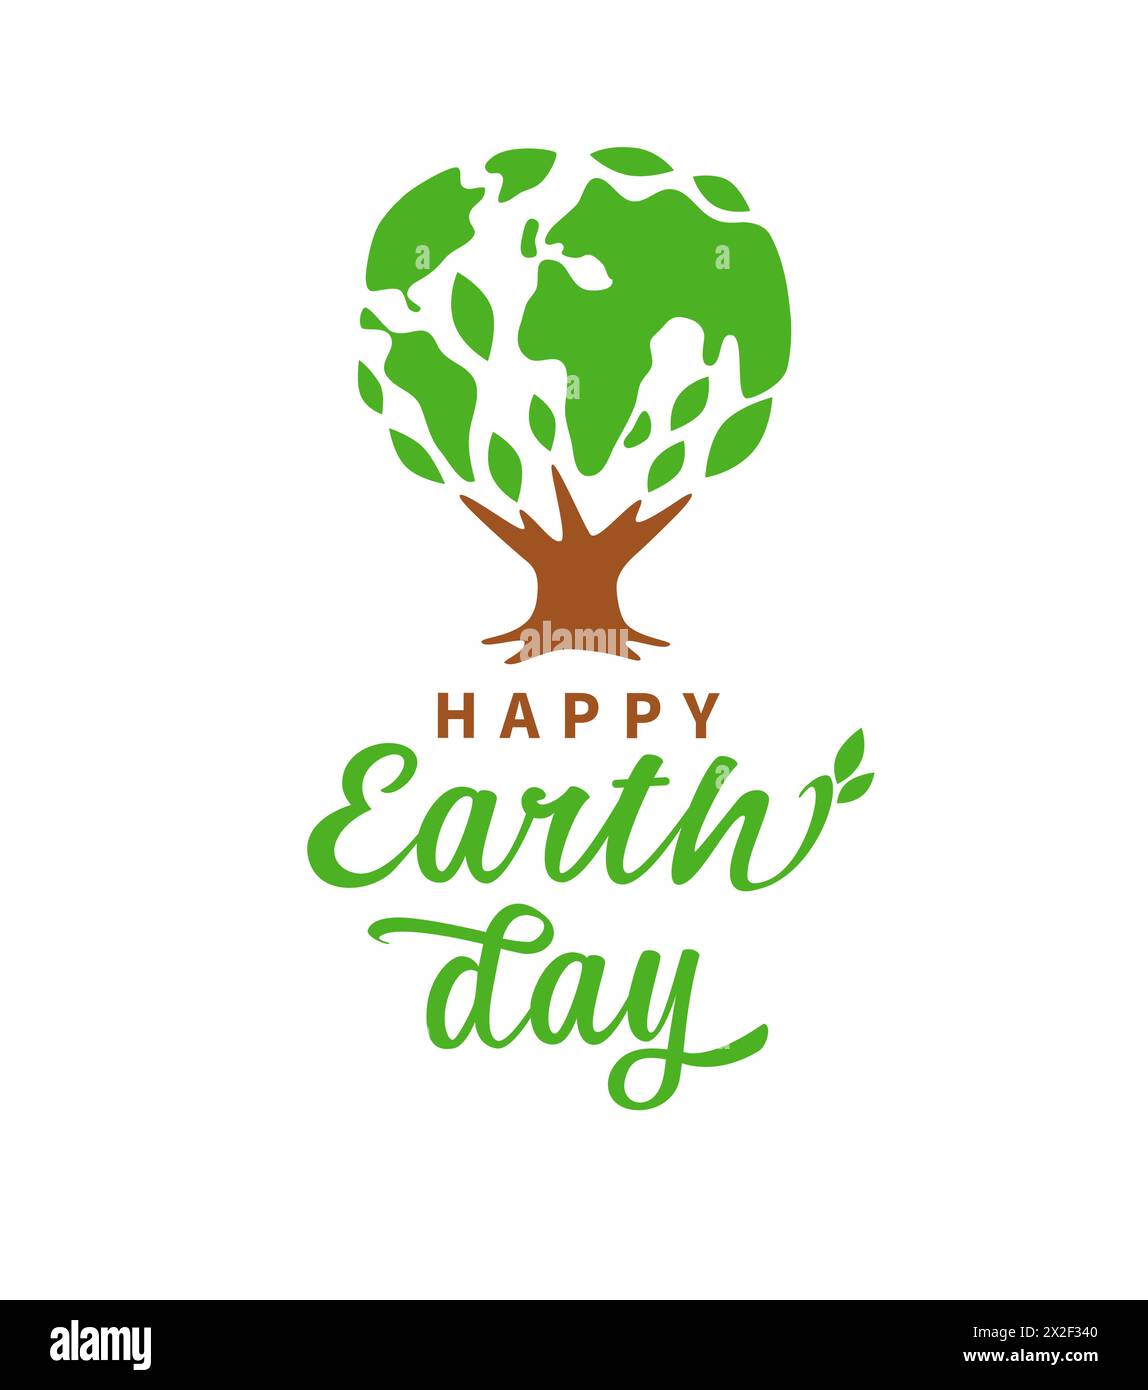 Hintergrundbild-Poster zum Happy Earth Day. Kreative Grüße mit dem Logo-Konzept „Tree of Life“. T-Shirt Grafik Idee. Süßer Baum mit grünen Blättern Stock Vektor